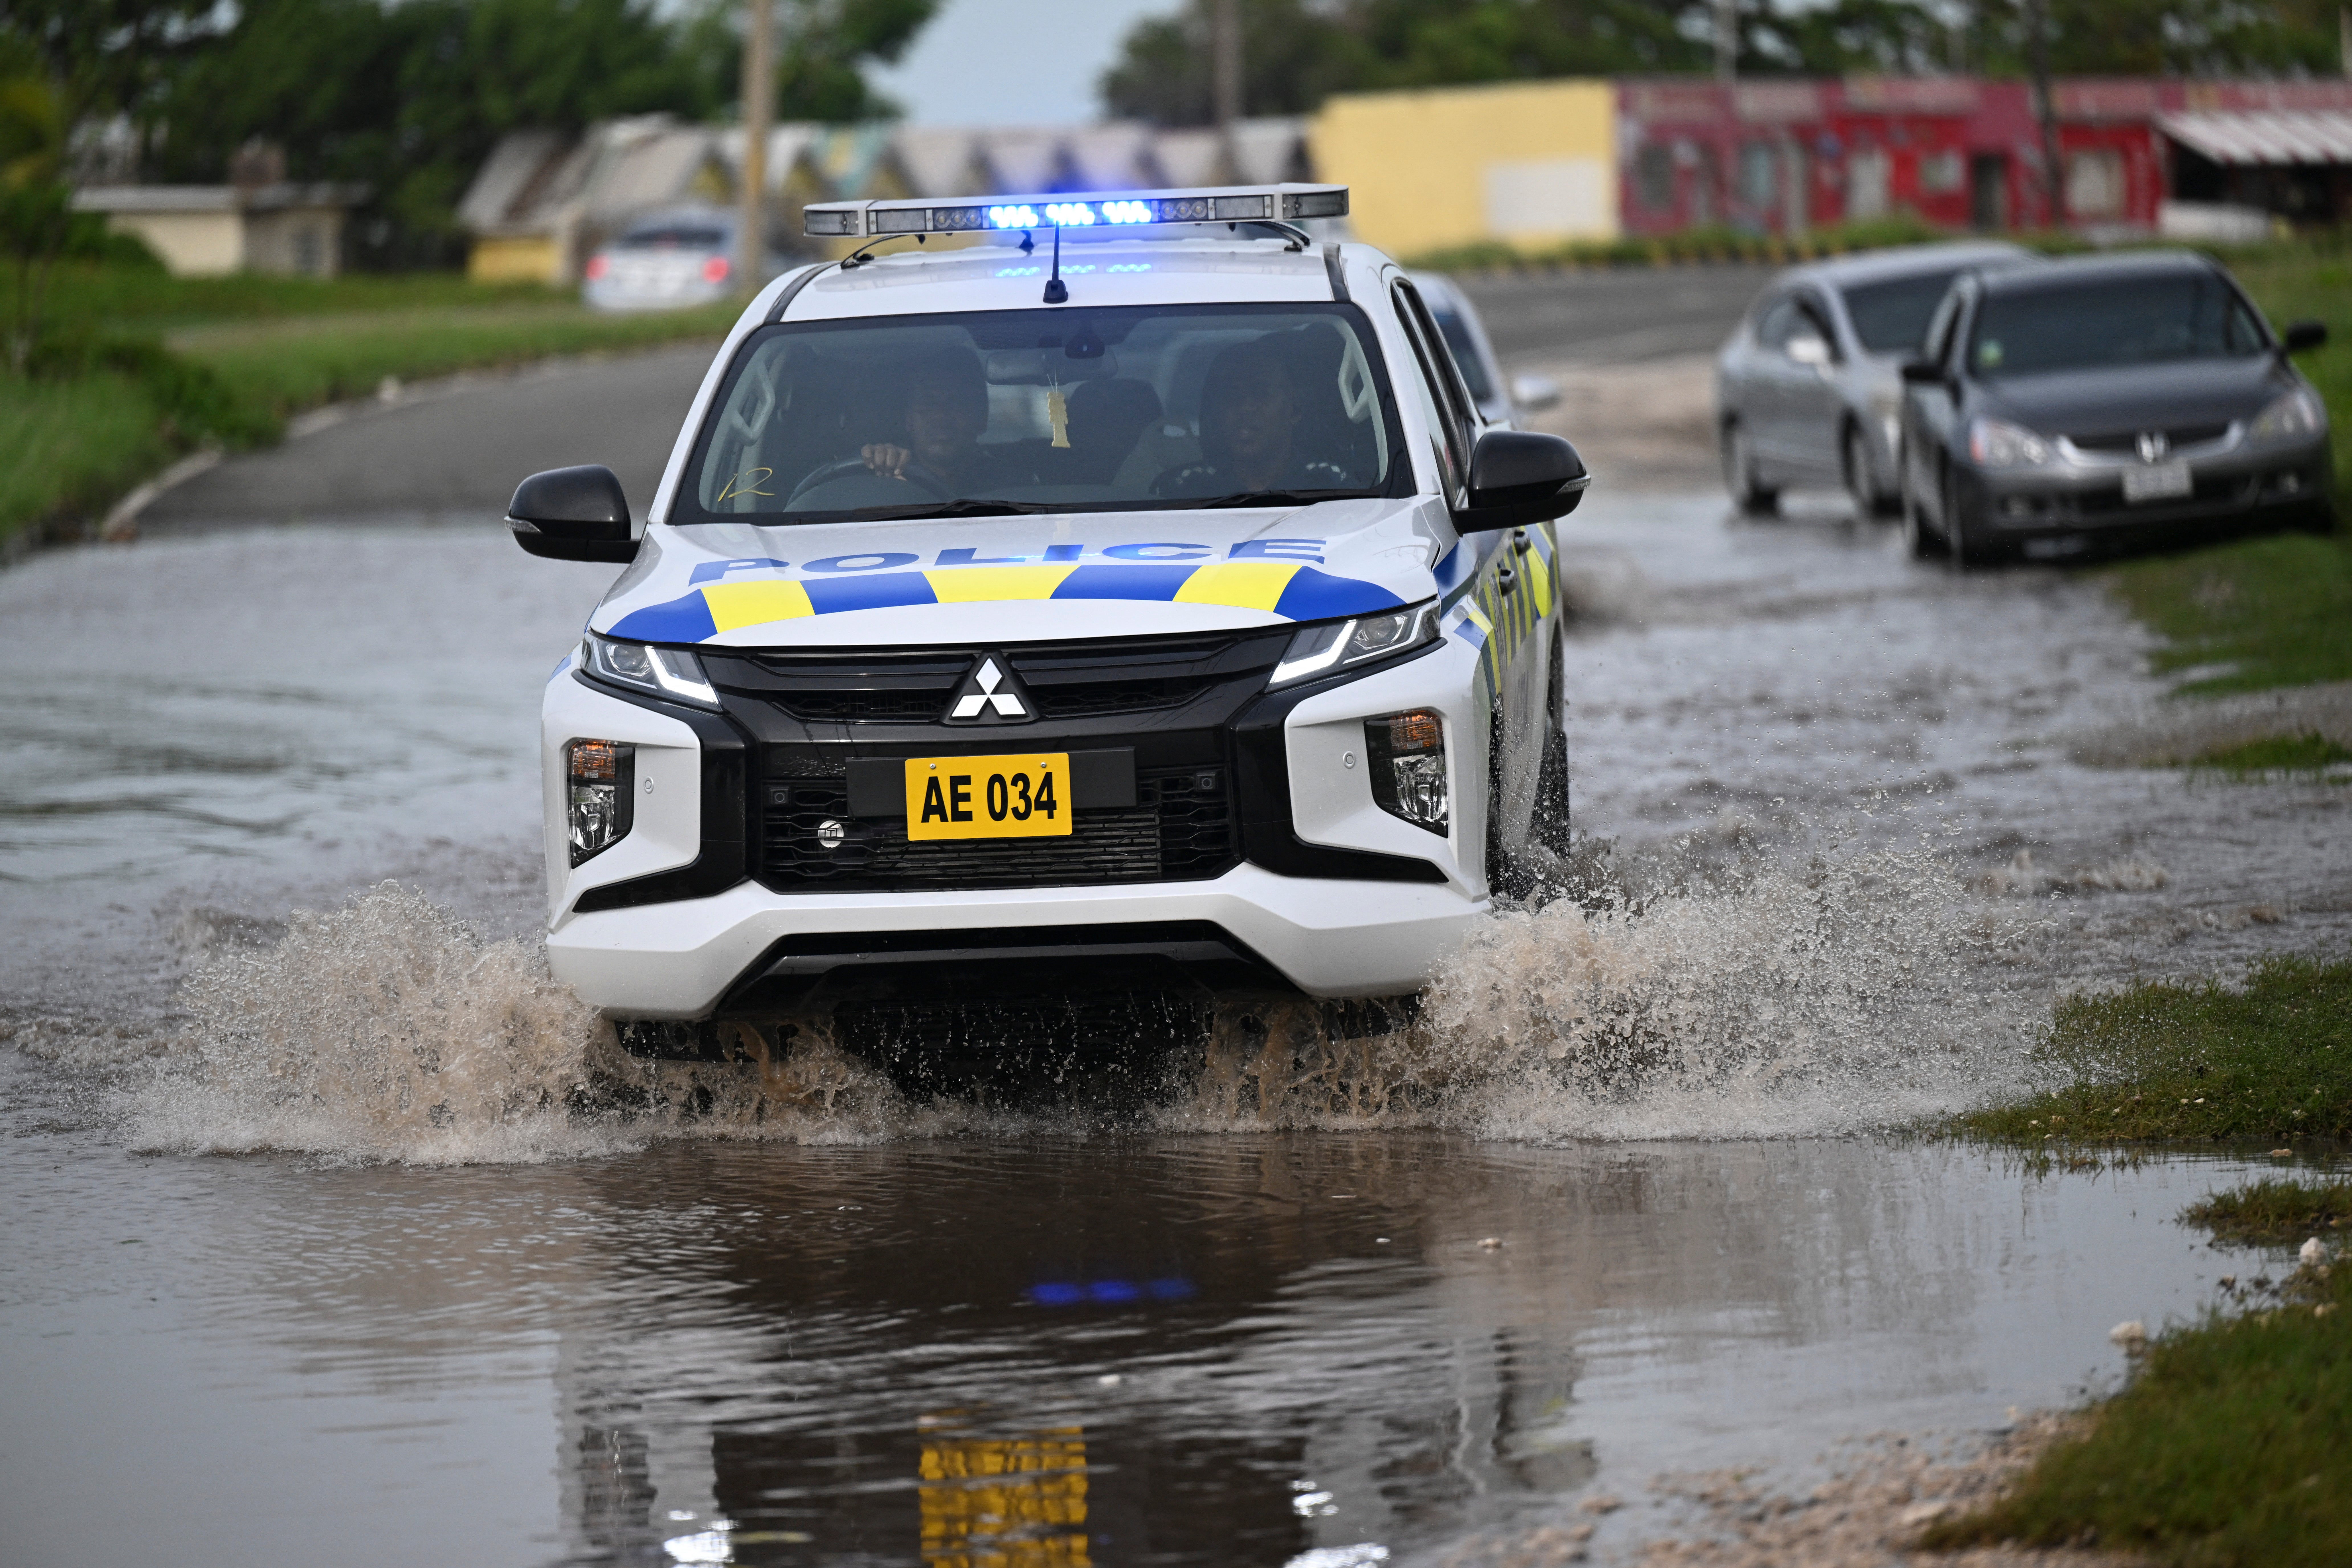 A police car drives through a flooded street in Kingston, Jamaica on Thursday following Hurricane Beryl